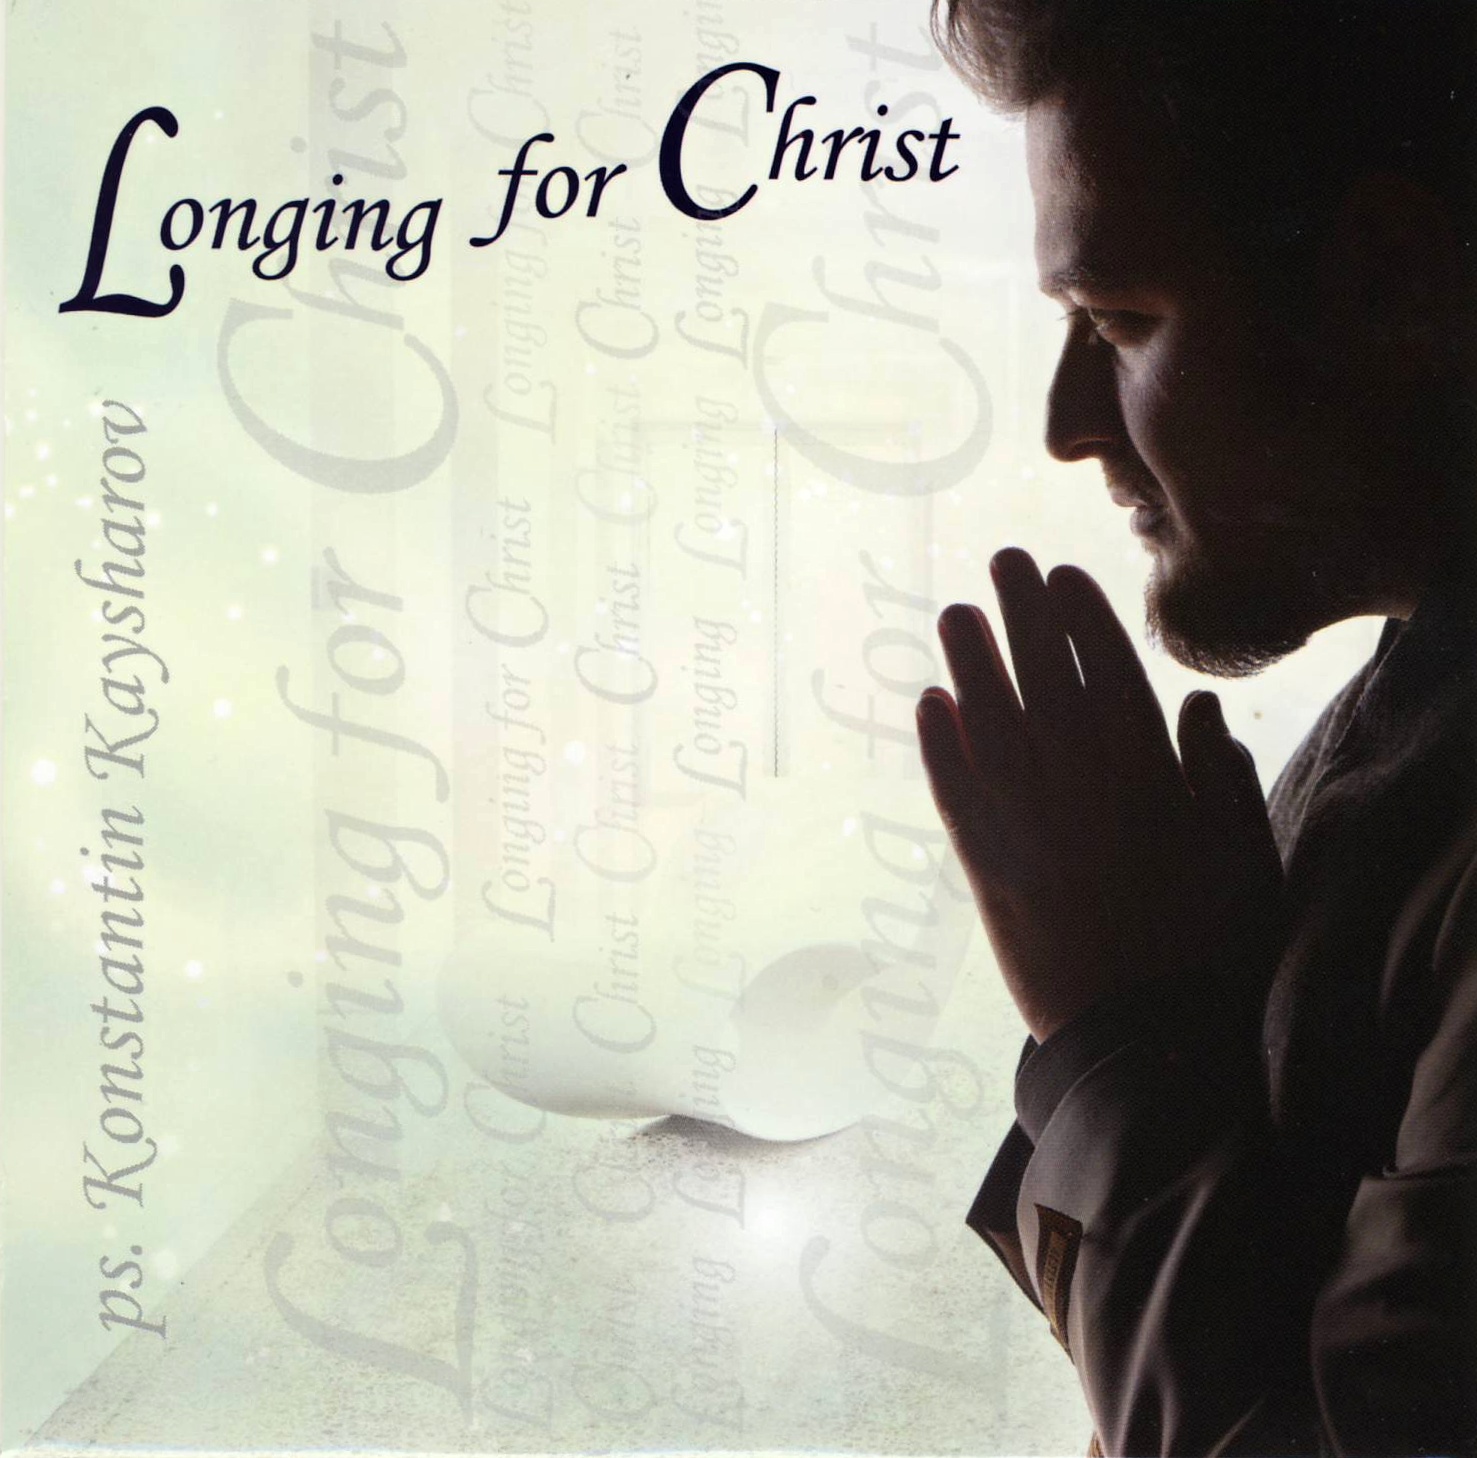 Longing for Christ